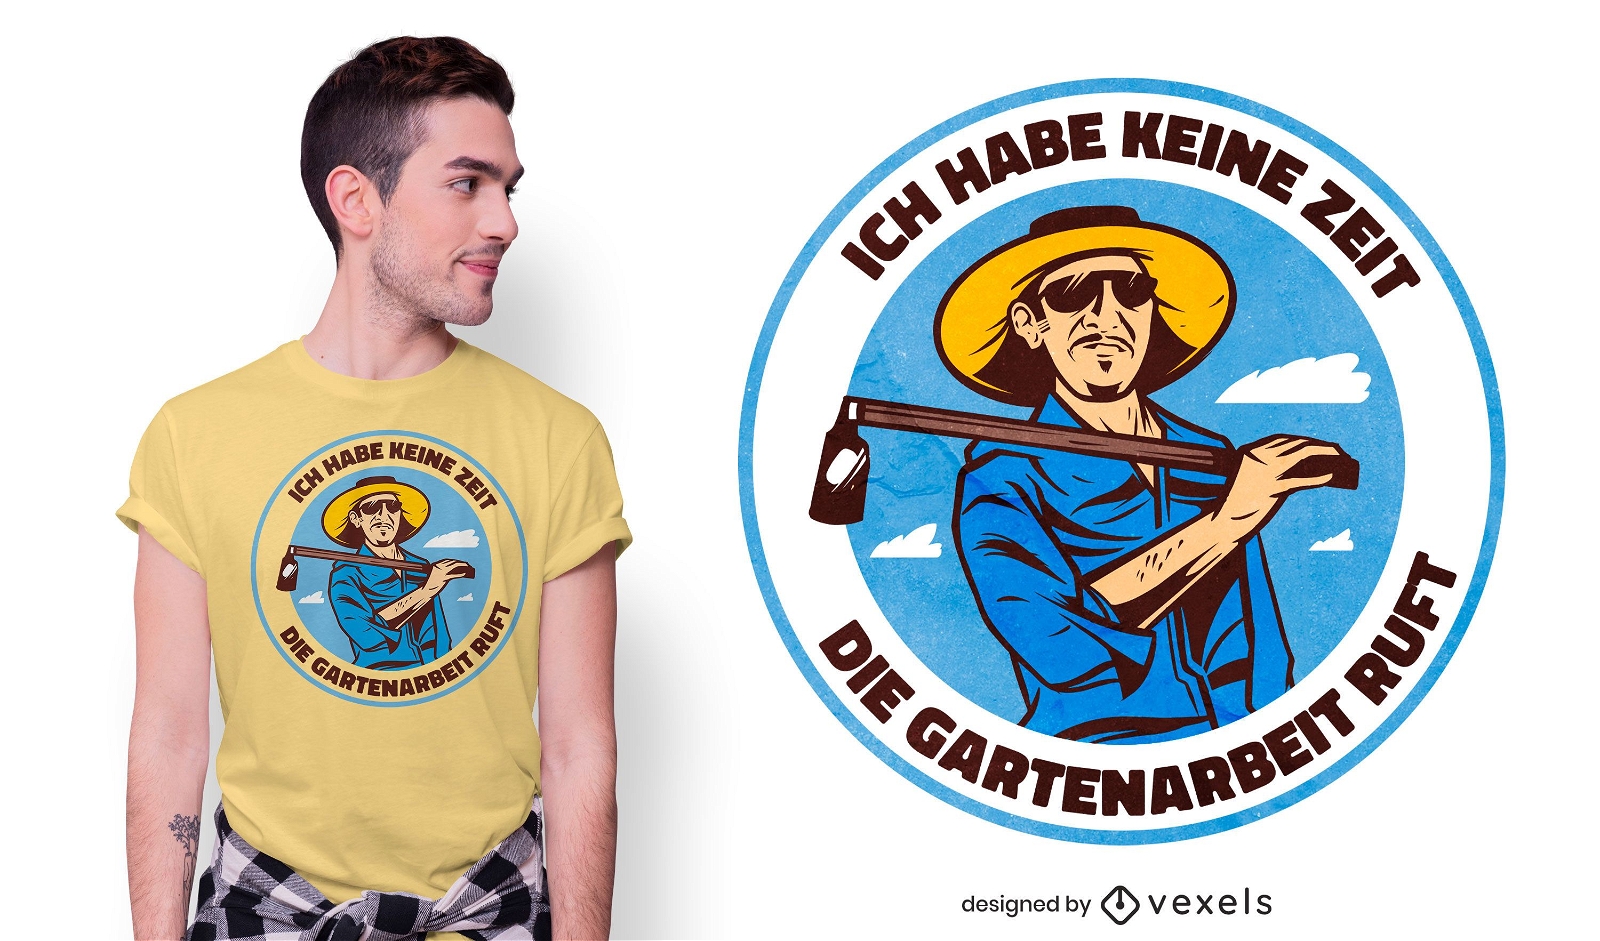 Dise?o de camiseta alemana con cita de jardiner?a.